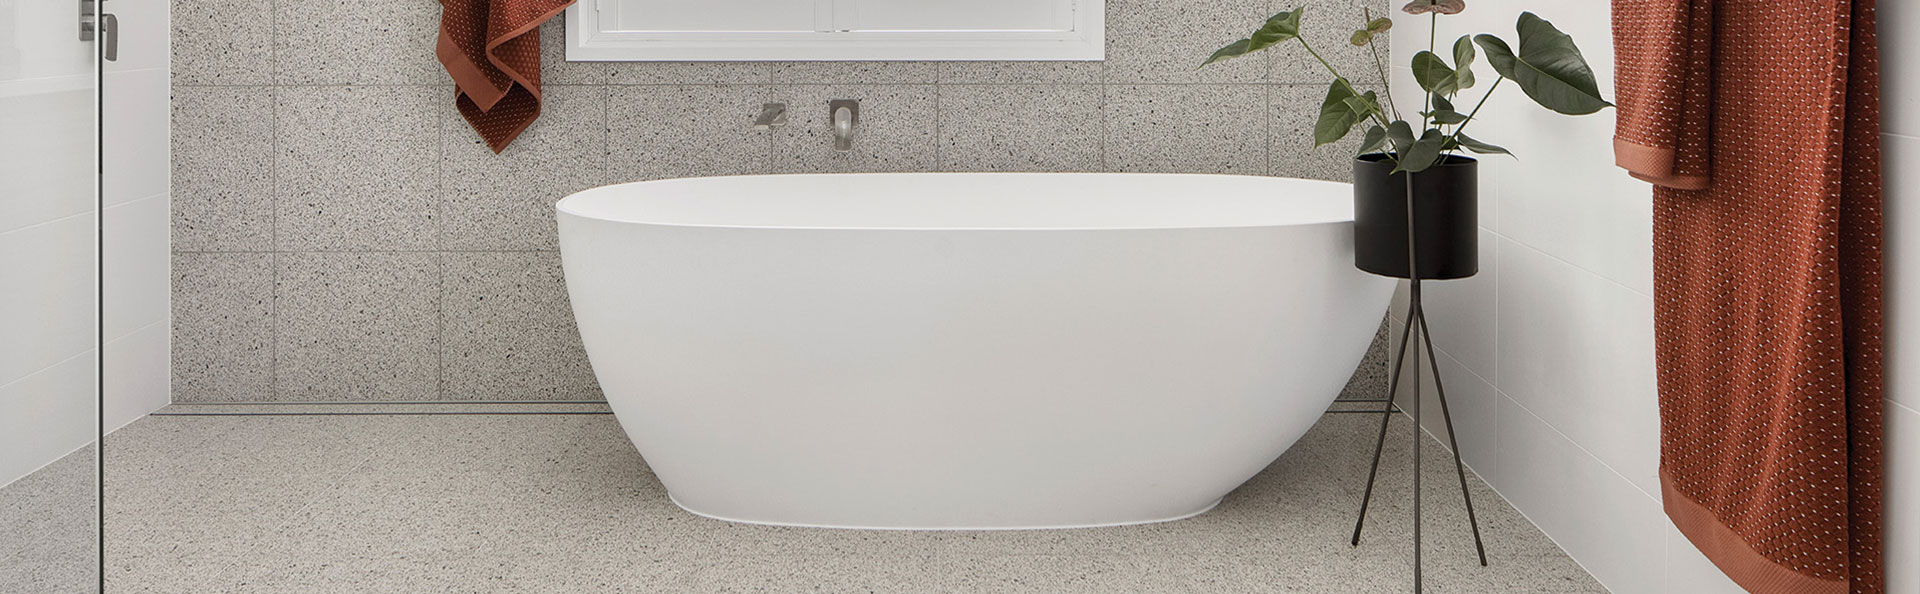 Hidden bathroom waste grates sleek and modern from Lauxes Grates International